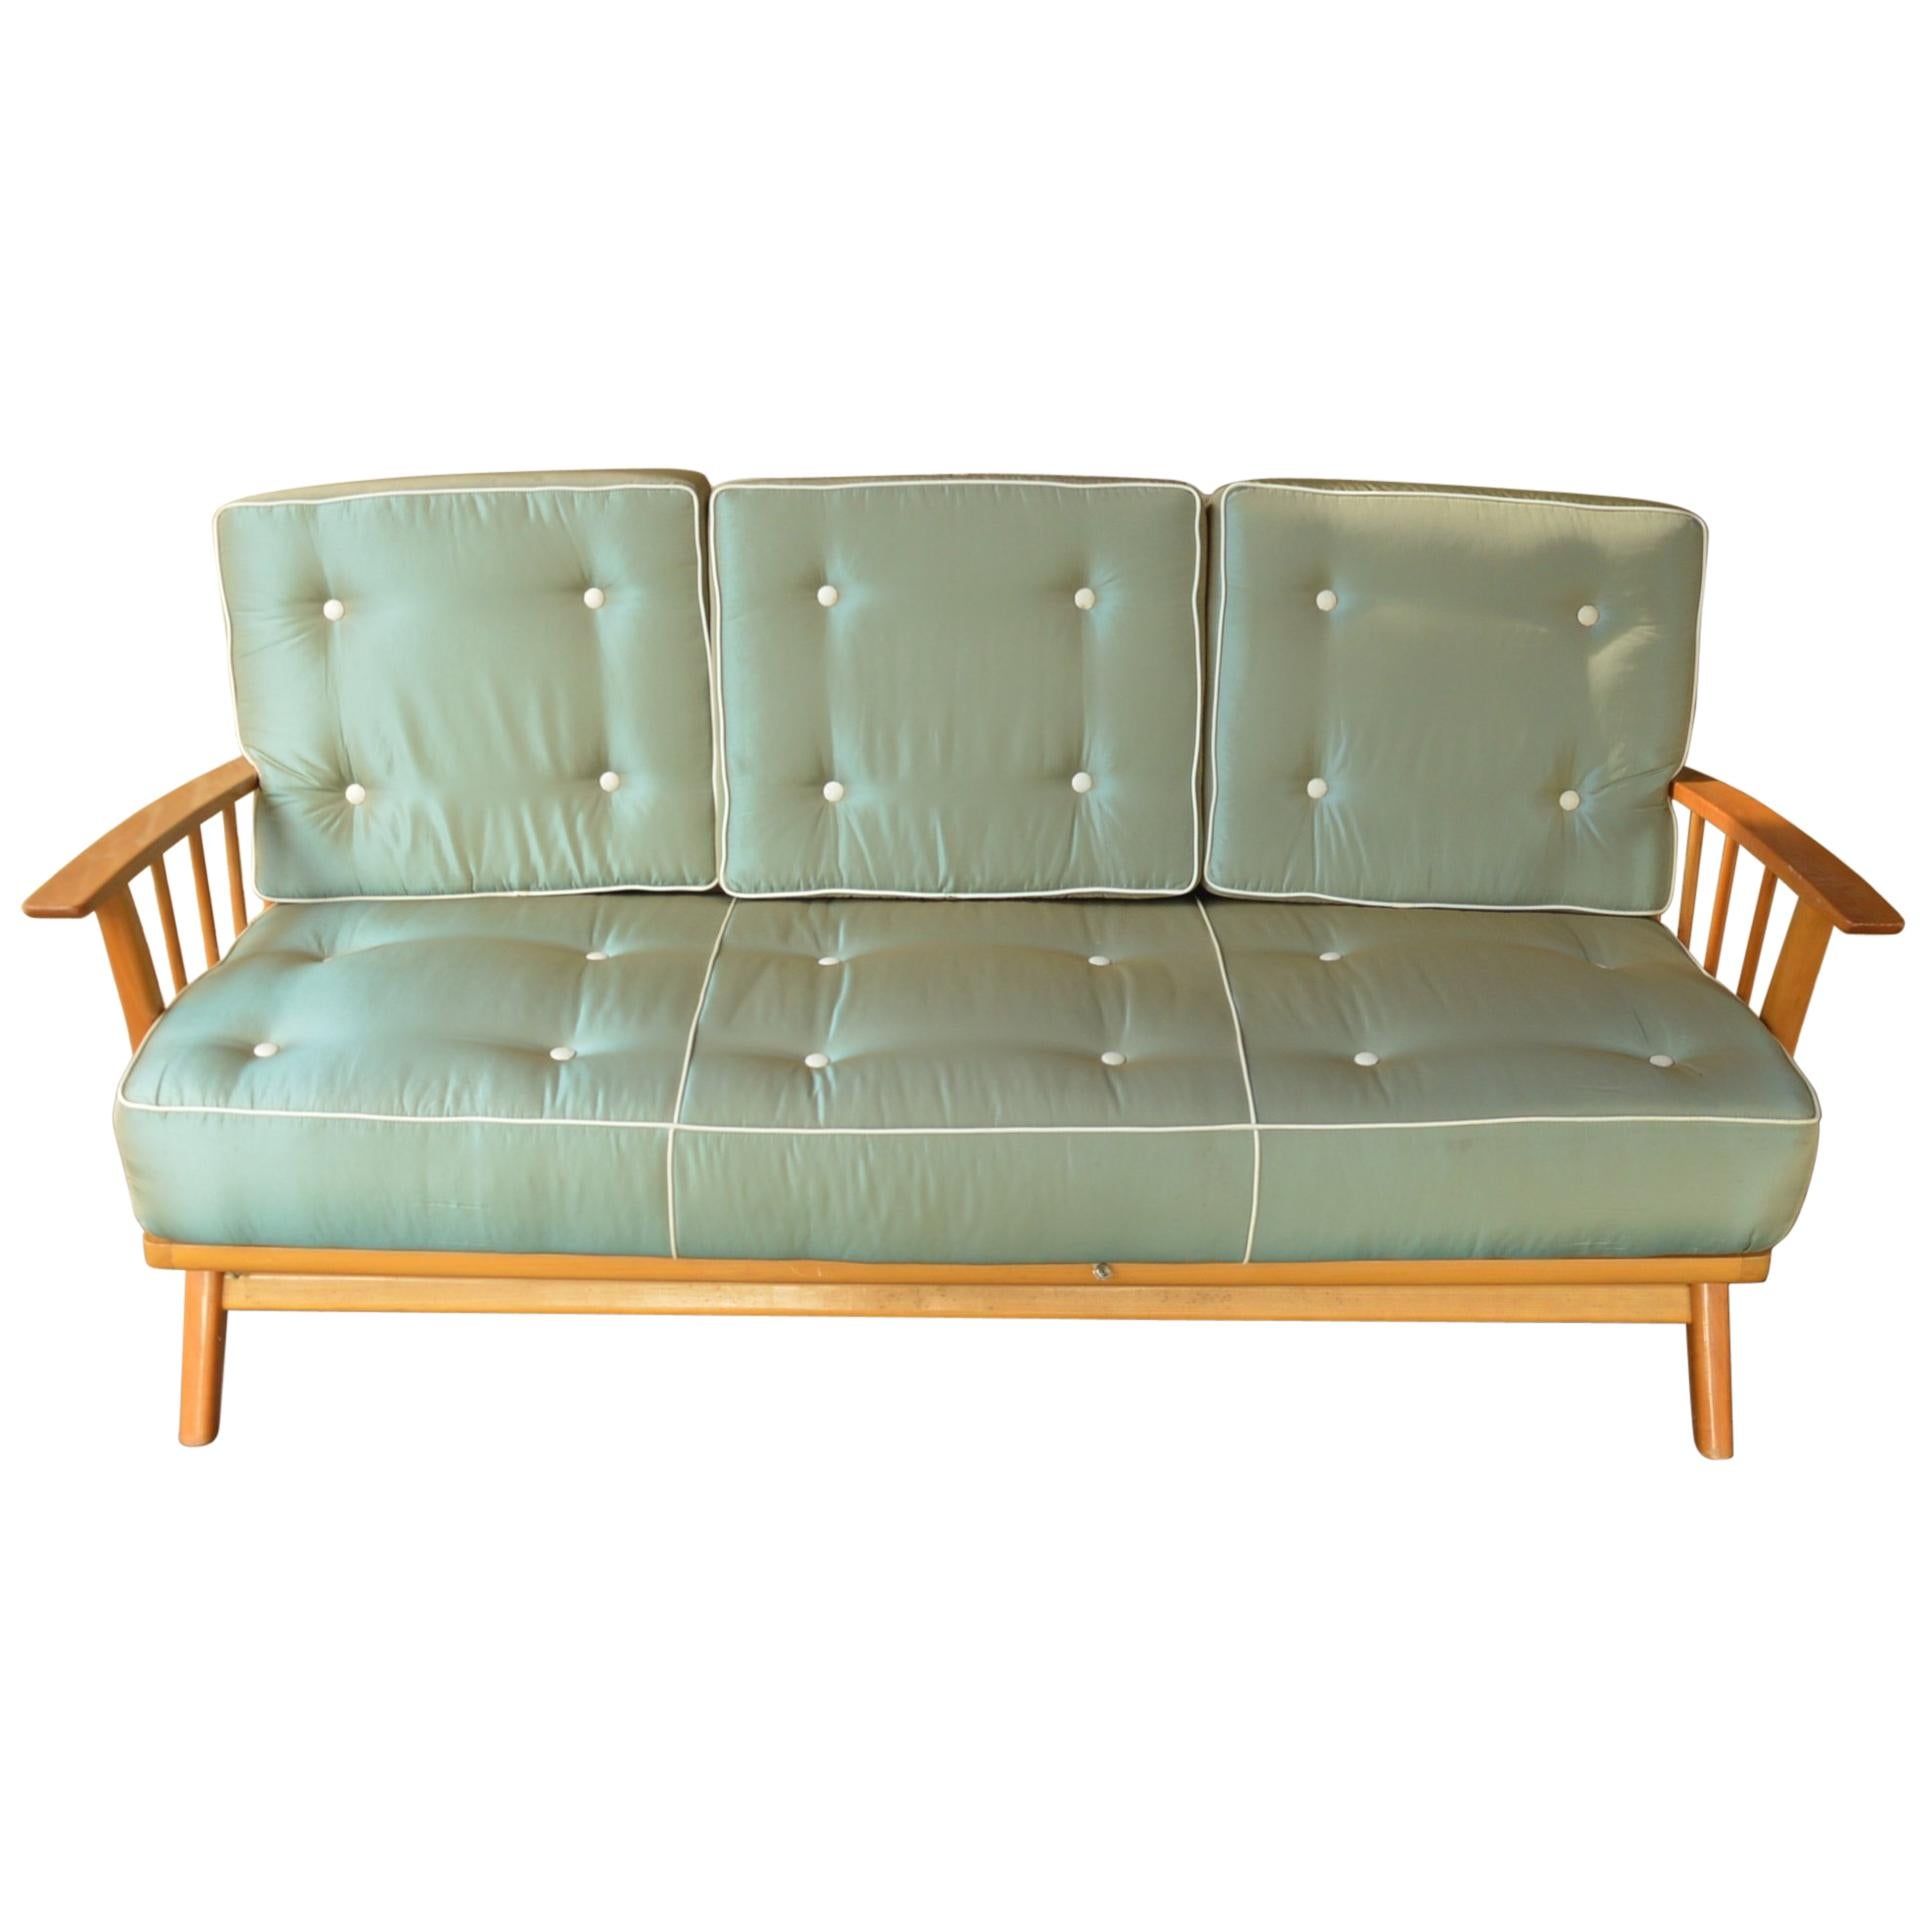 Modernist Designer Vintage Sofa with Foldable Arms, 1960s For Sale